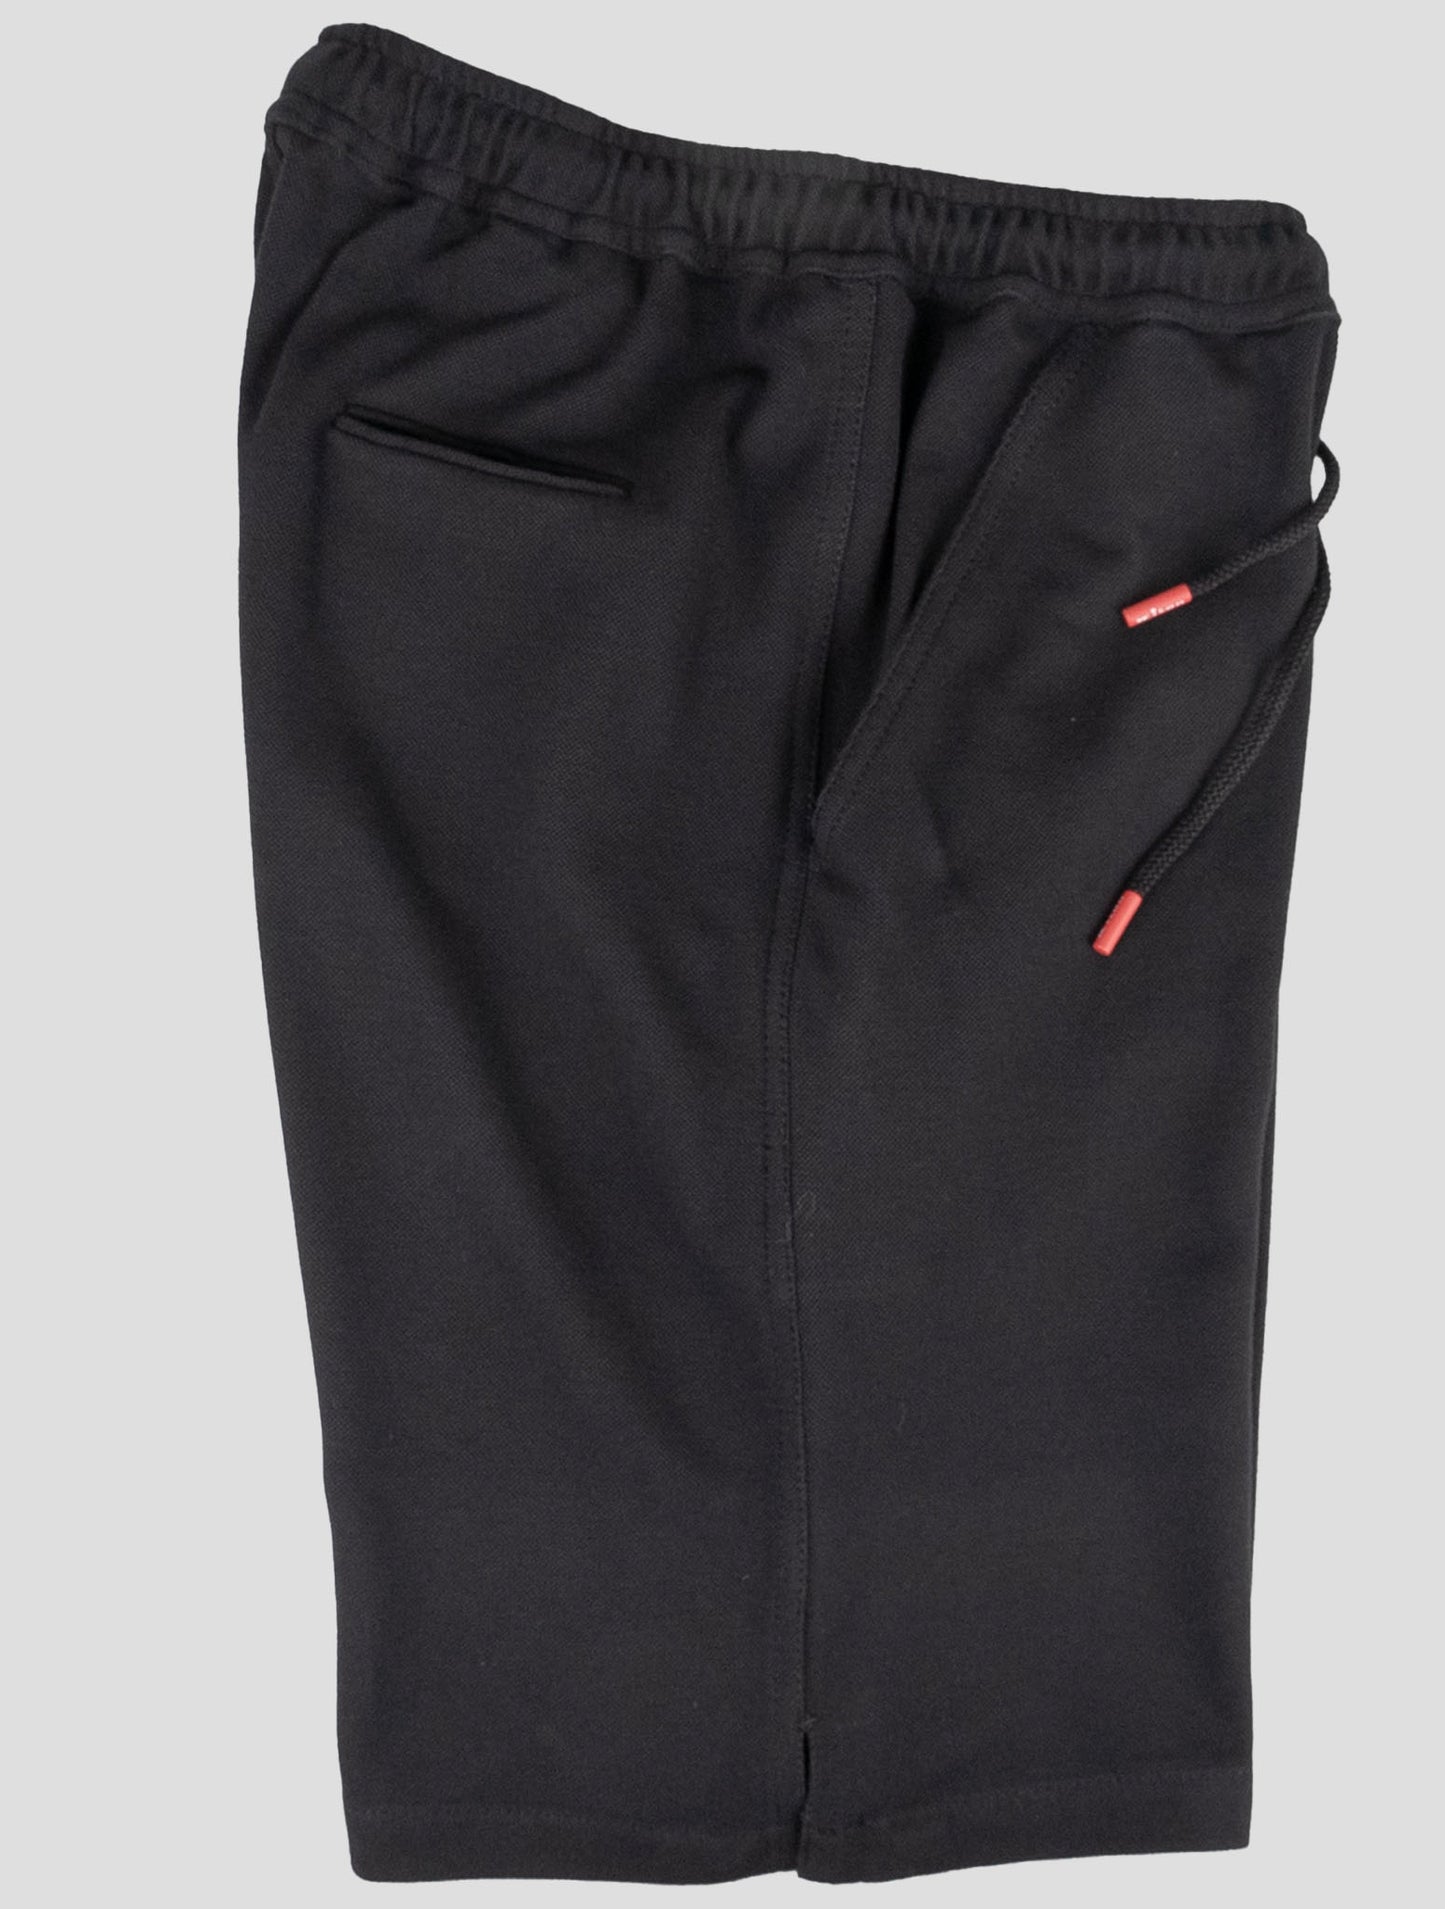 Kiton Matching Outfit-Survêtement Pantalon Court Vert Umbi et Noir